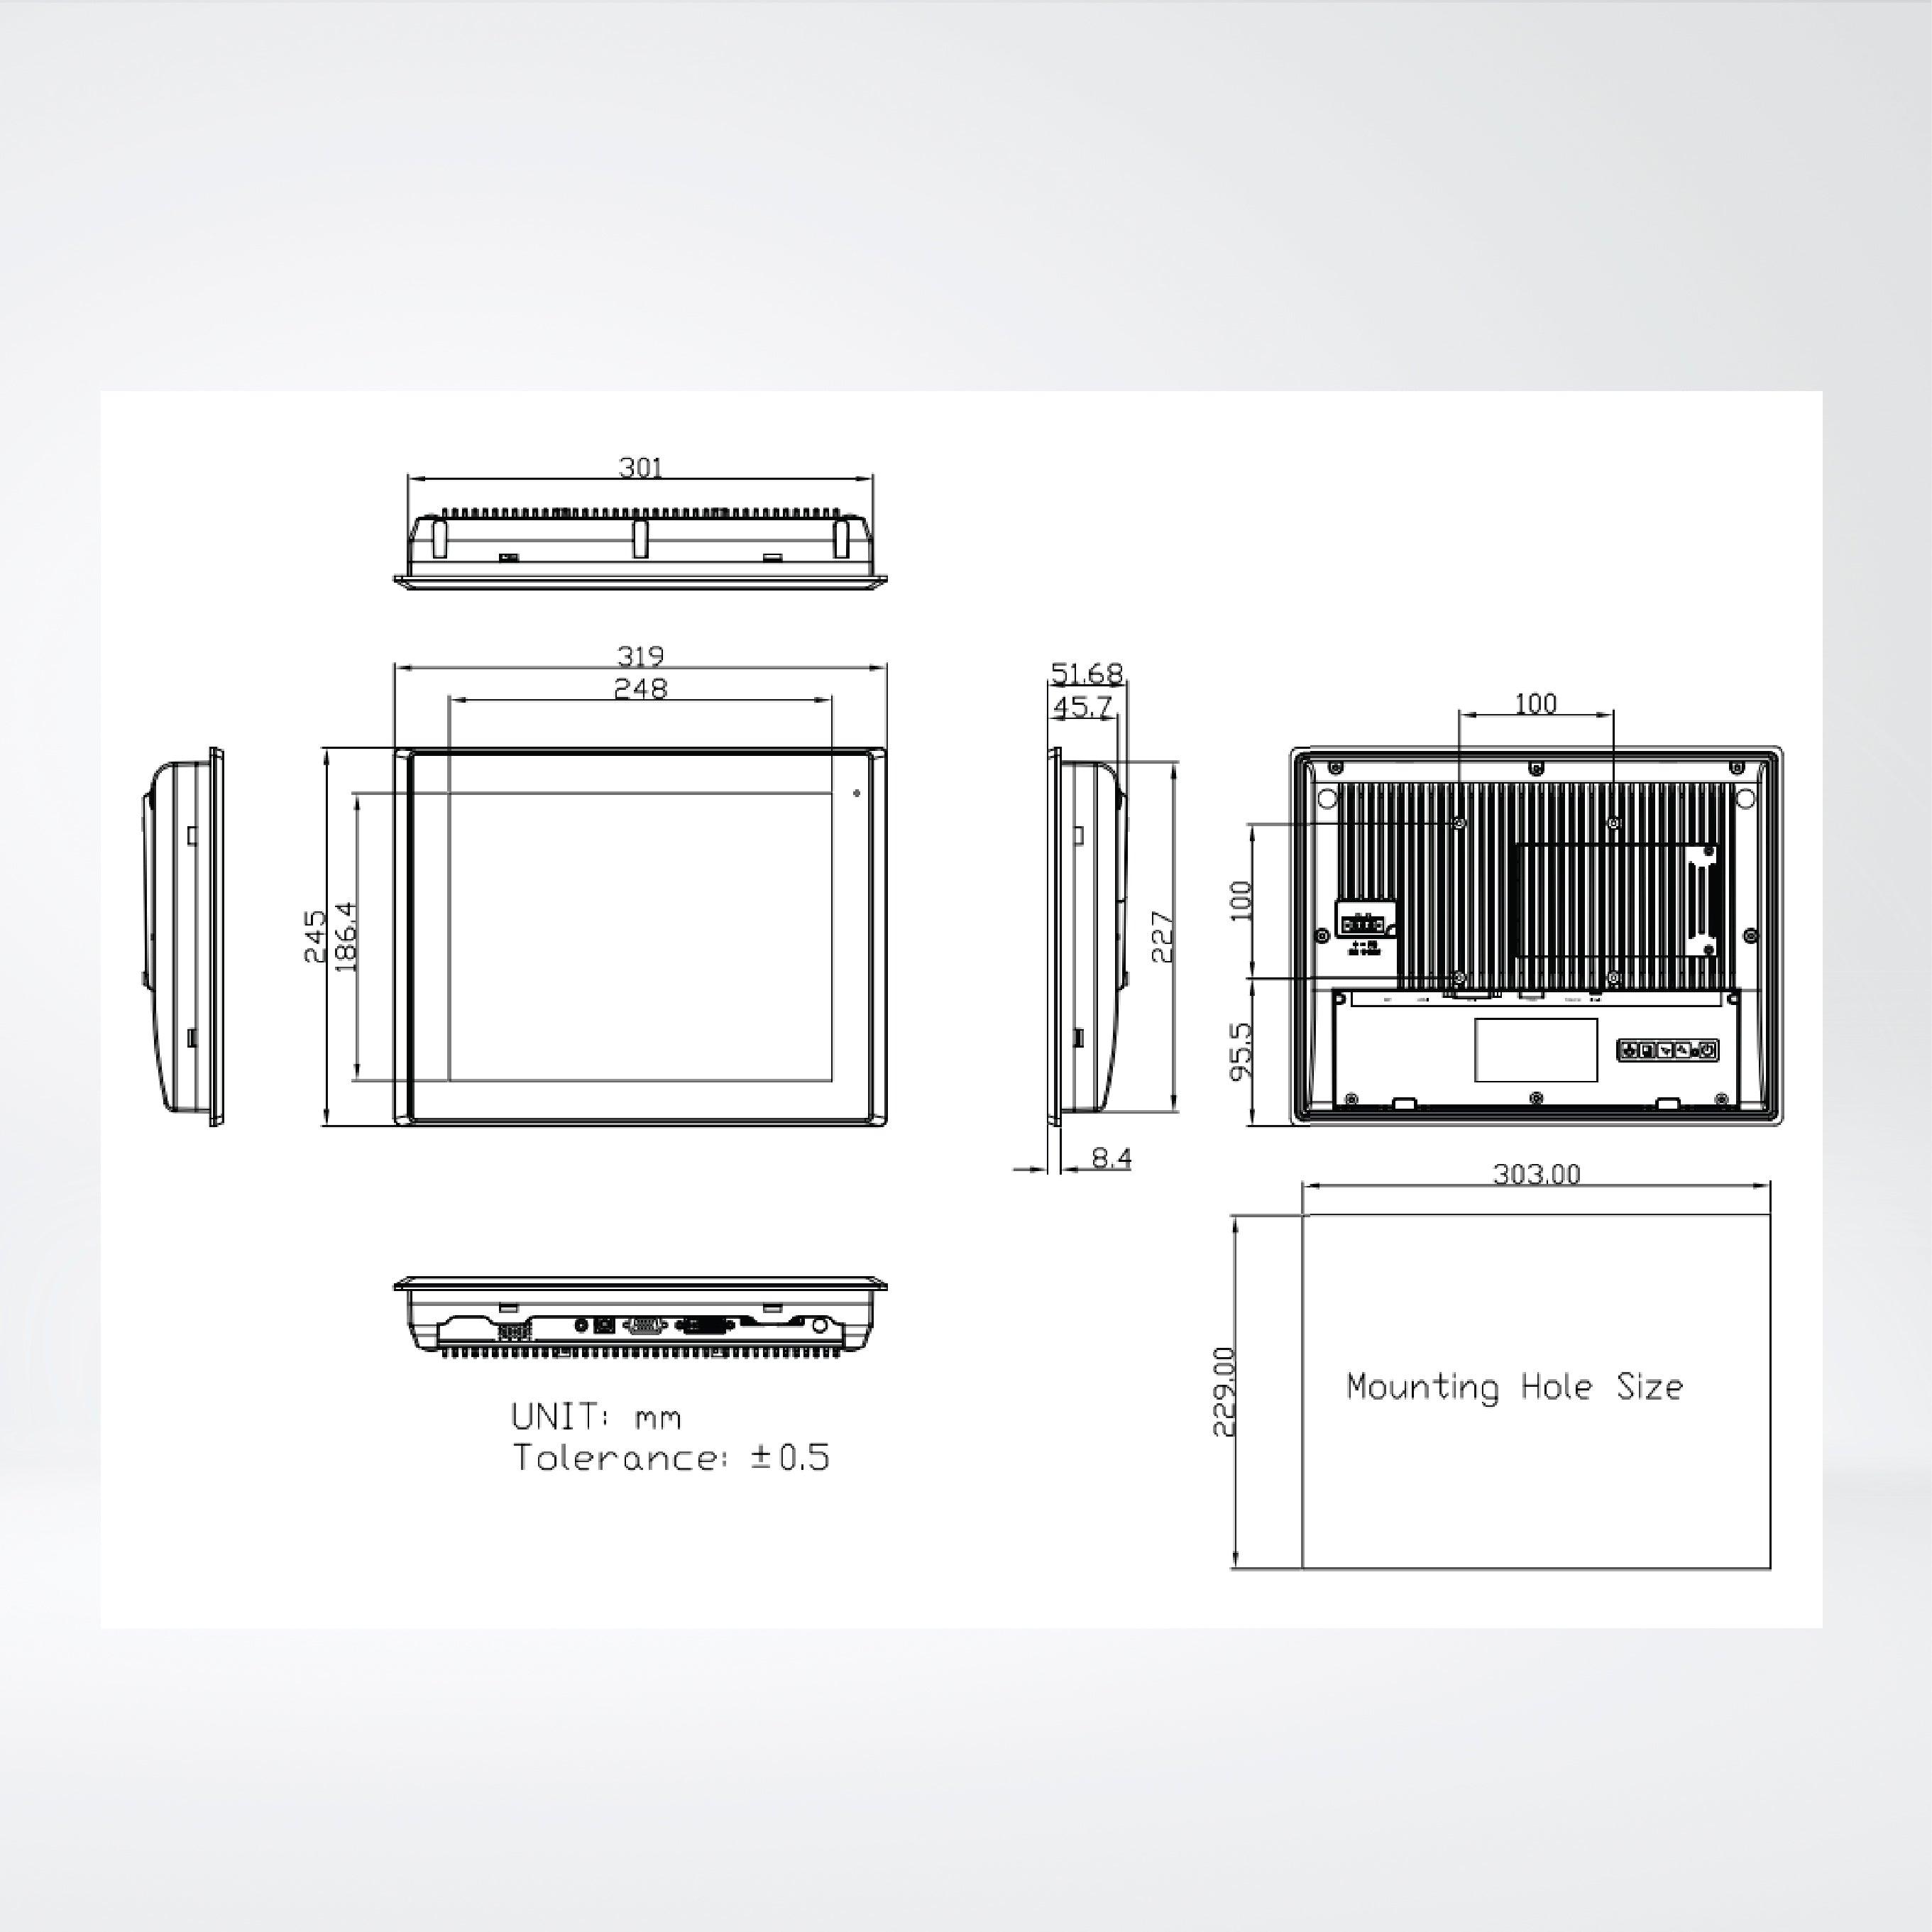 ARCDIS-112APR(H) 12.1” Front Panel IP66 Aluminum Die-casting Display - Riverplus